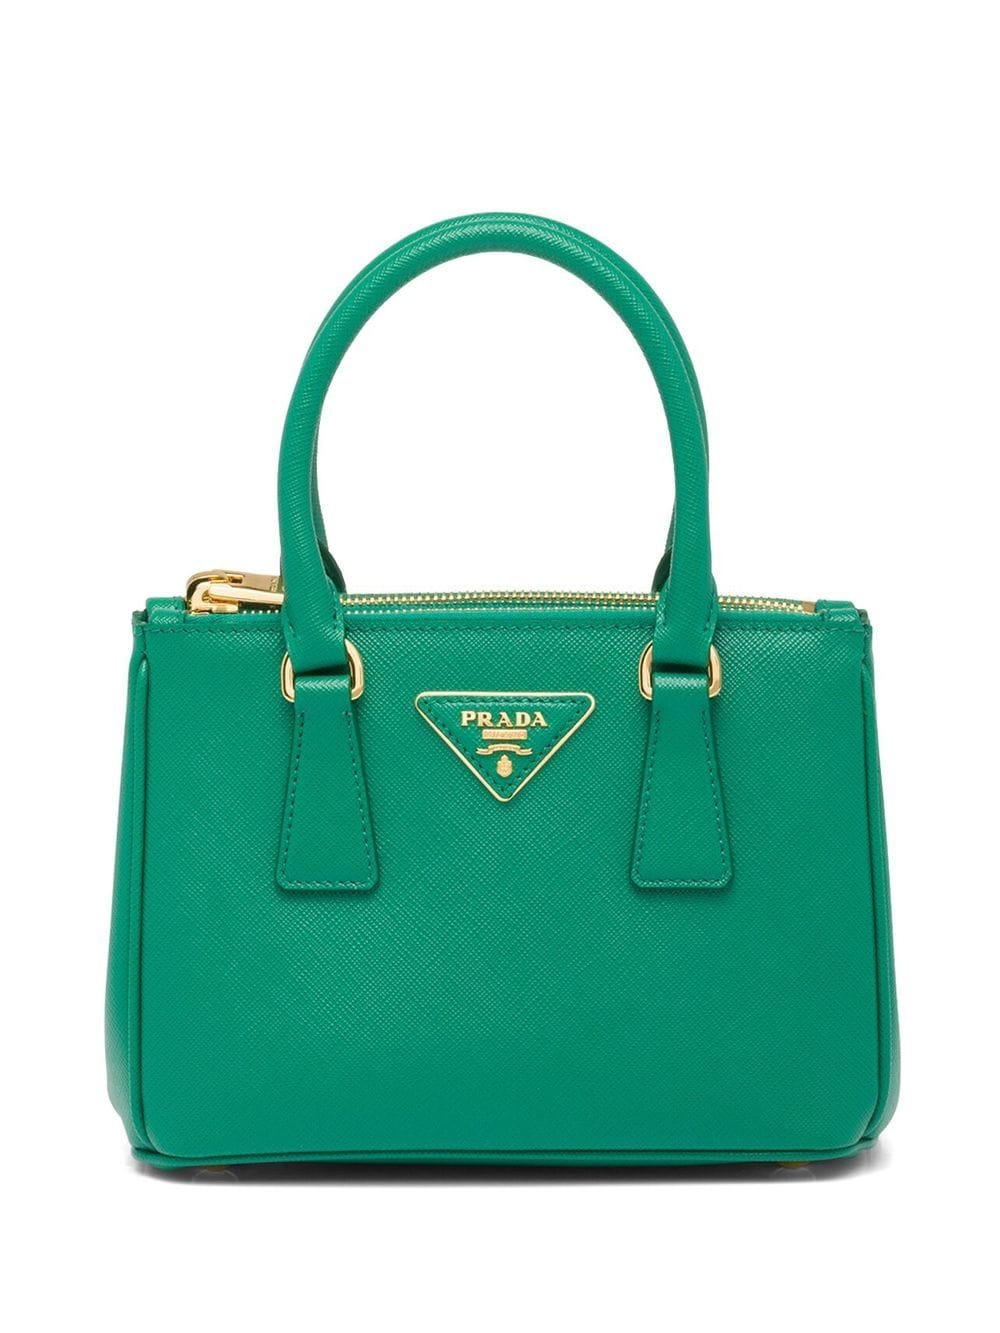 Prada Galleria leather mini bag - Green von Prada